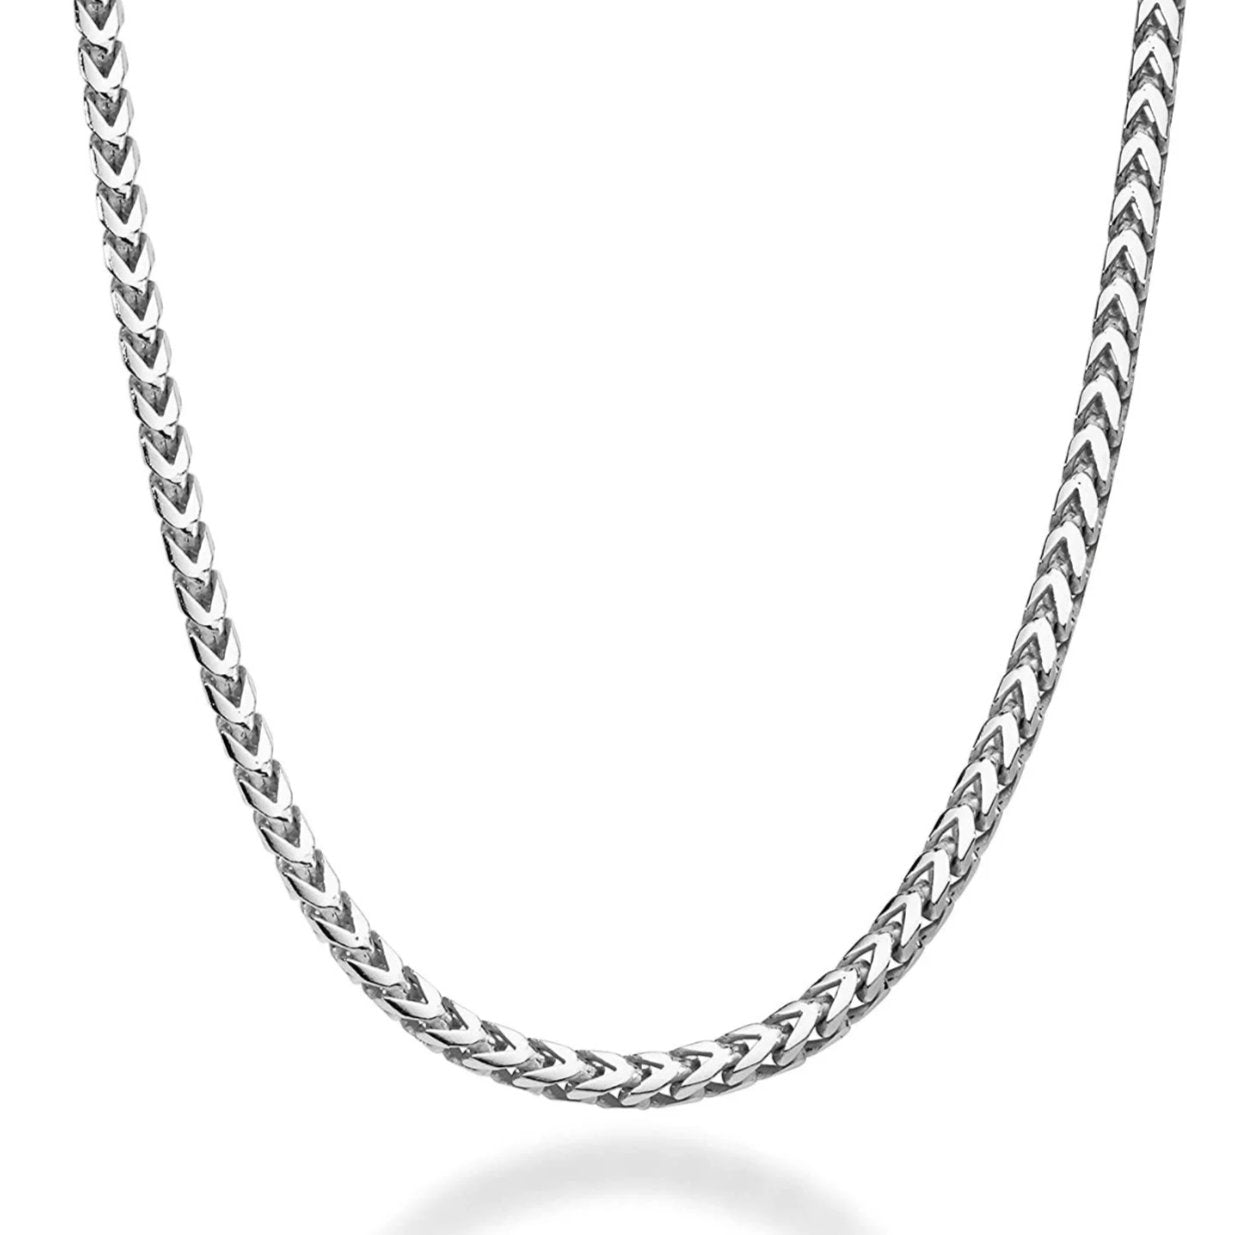 Men's 18k Gold Wheat Chain Necklace